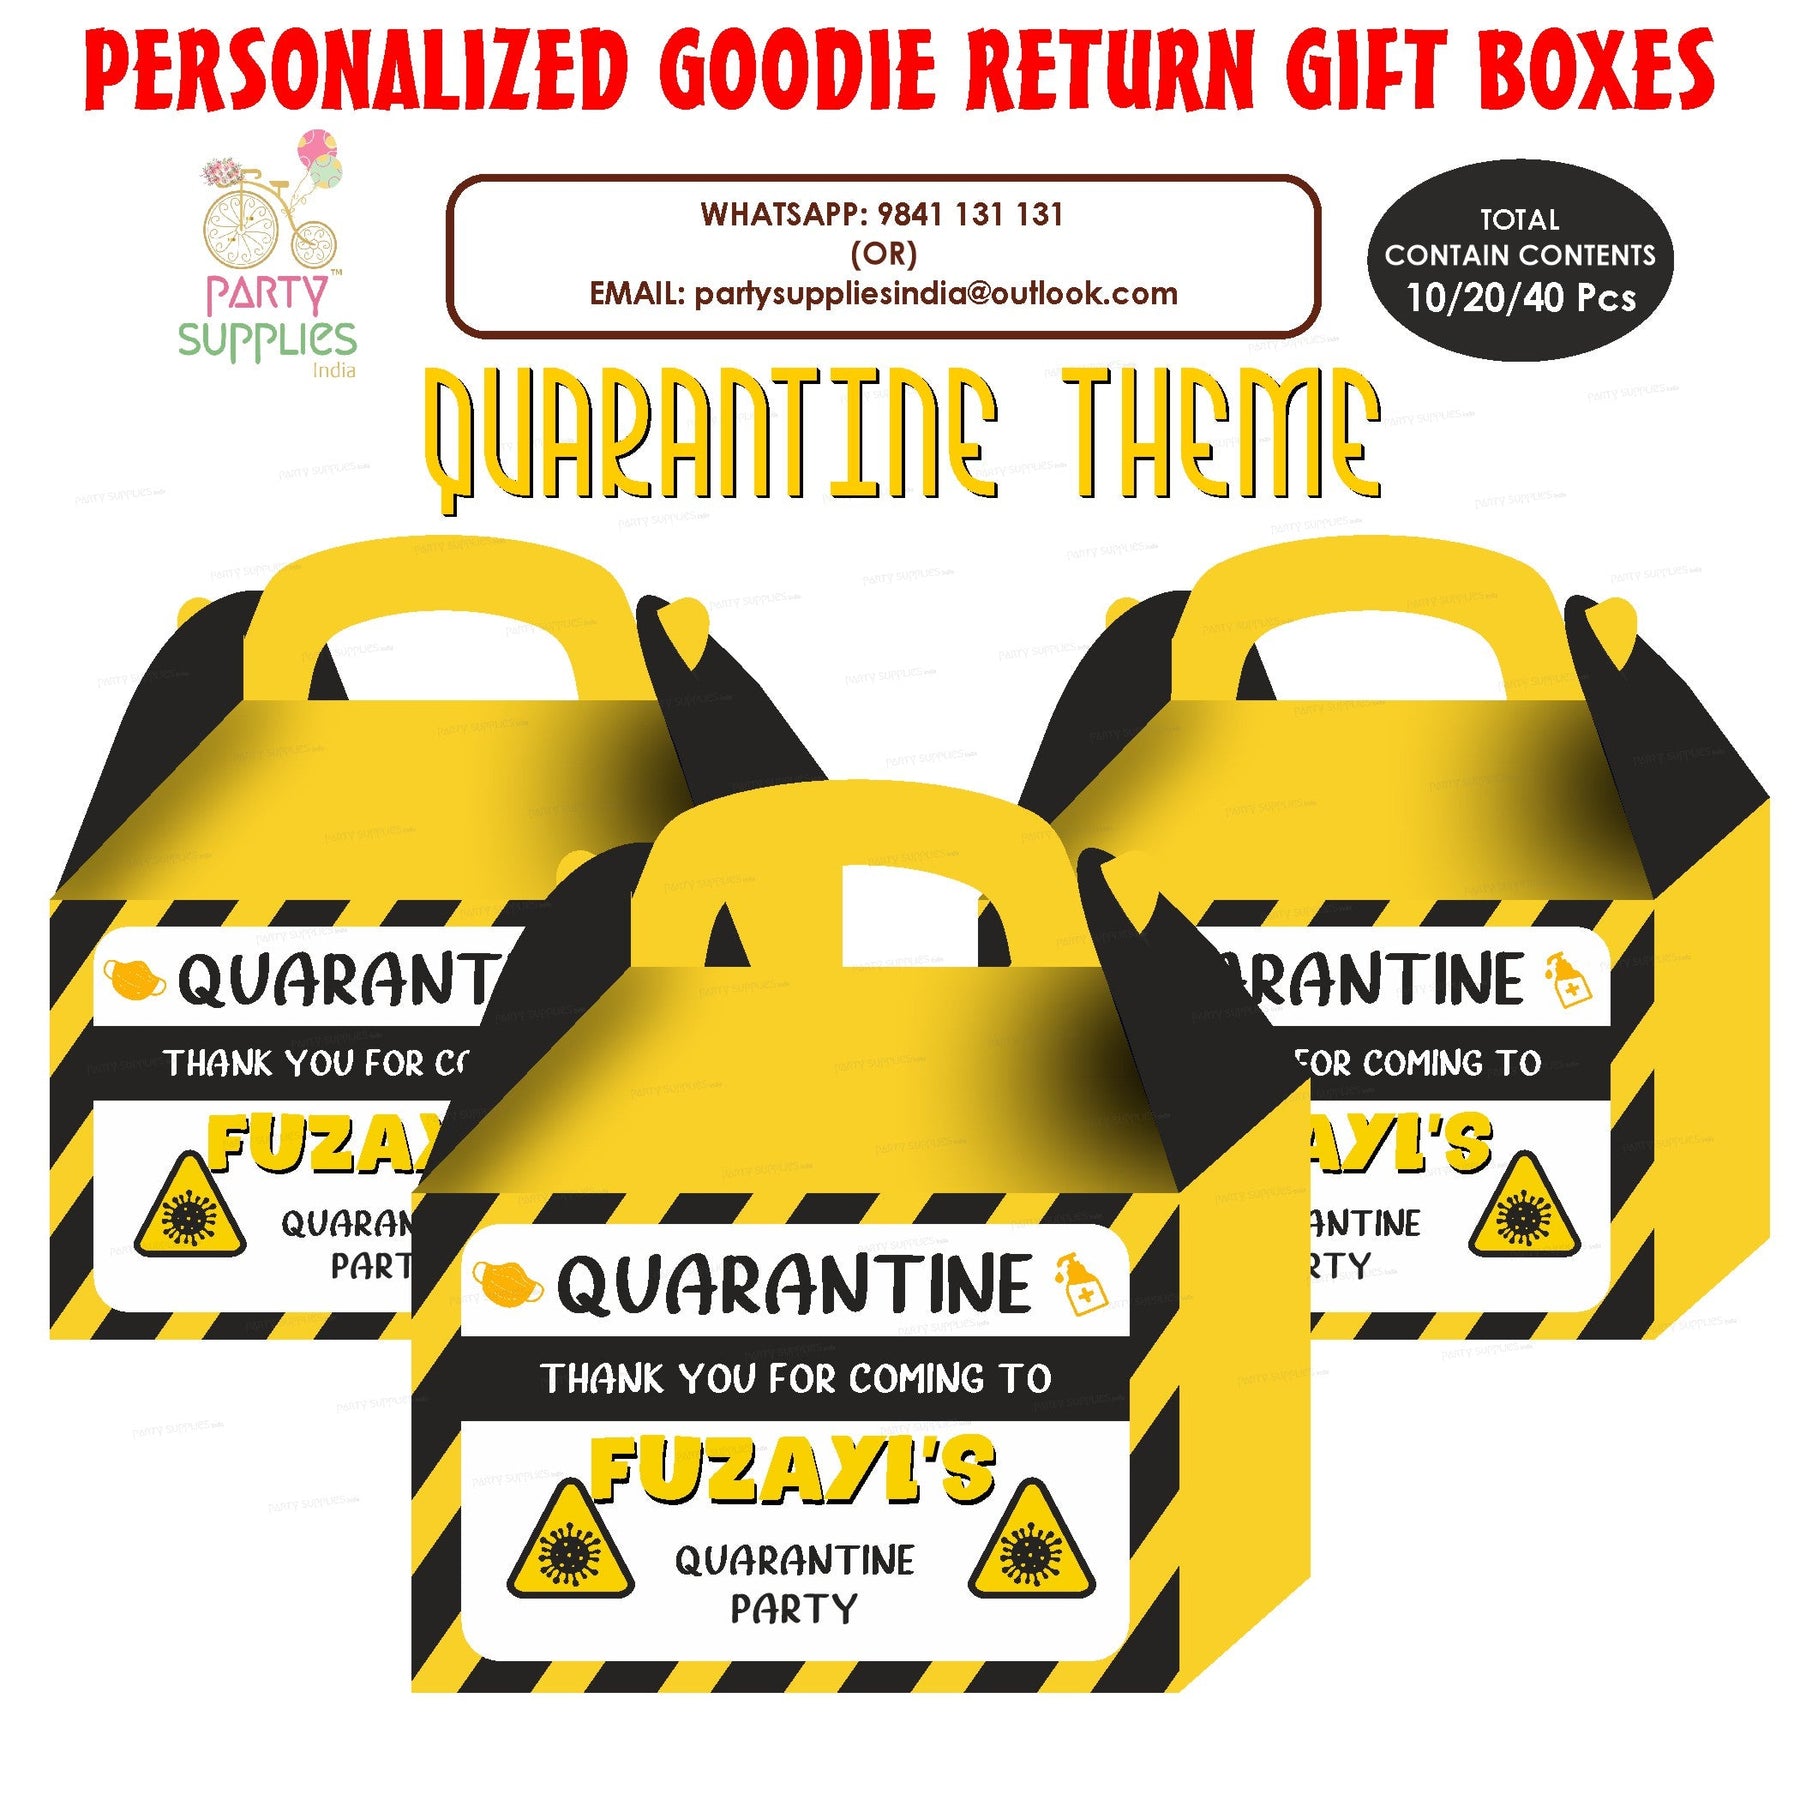 PSI Quanrantine Theme Goodie Return Gift Boxes